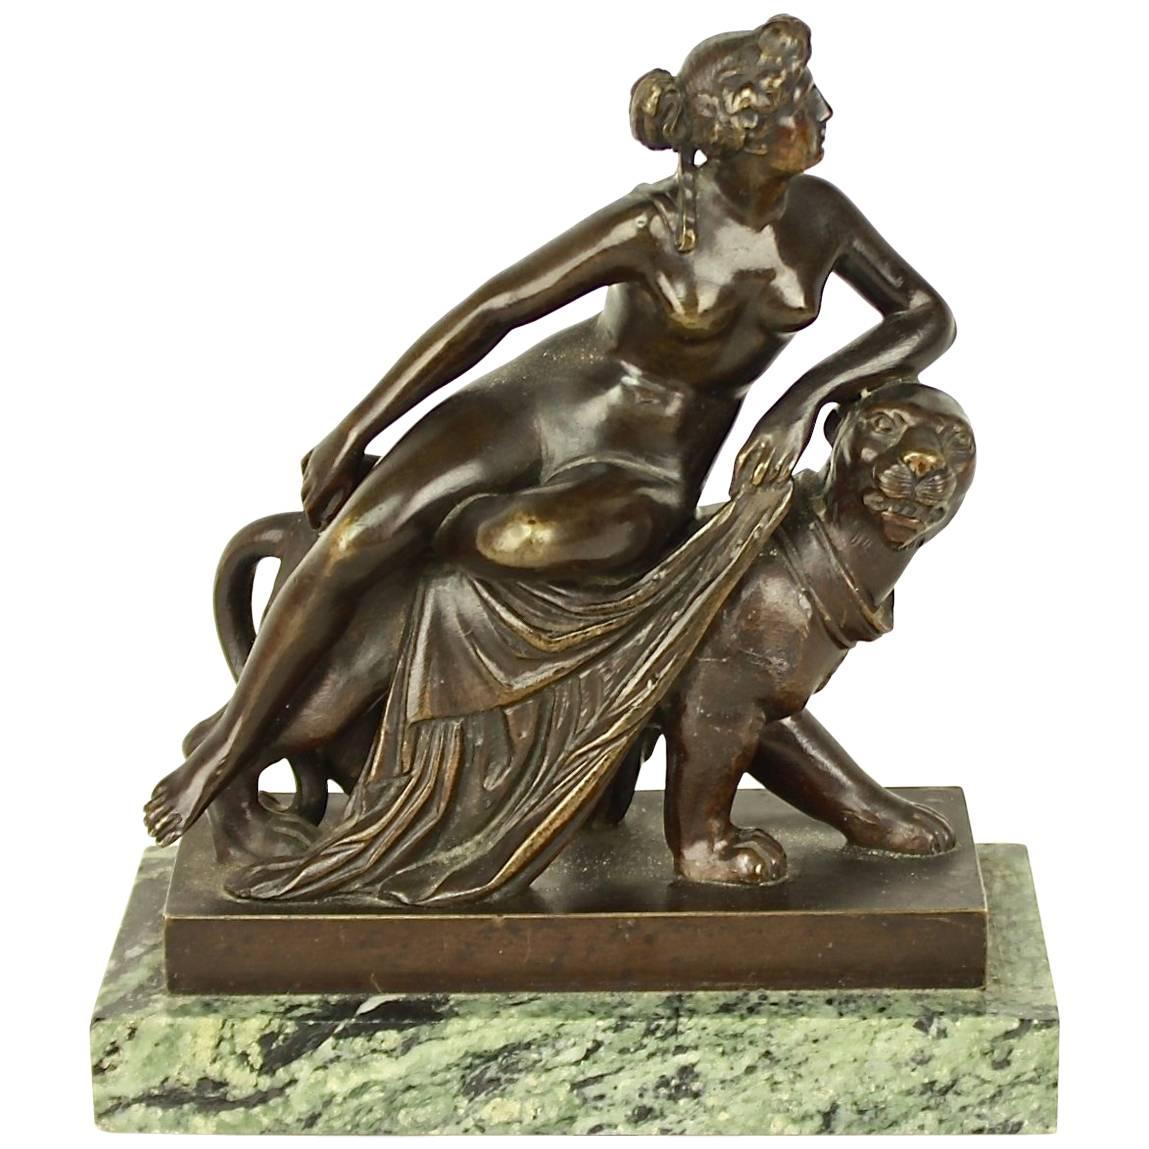 Small Bronze Sculpture of 'Ariadne Riding a Panther' after Dannecker